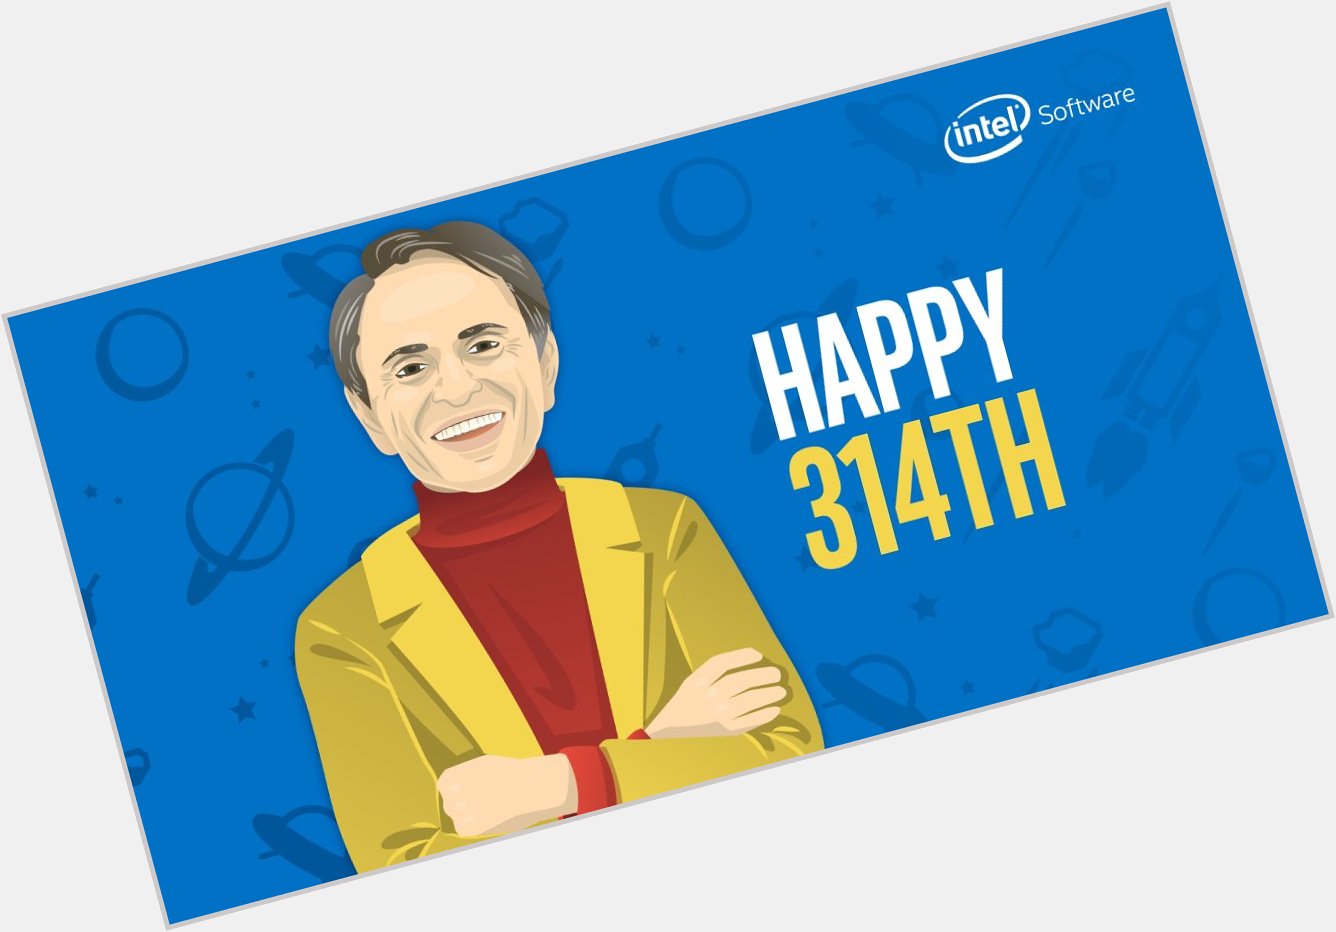  Carl Sagan was born on the 314 day of the year? Happy birthday, Carl! 